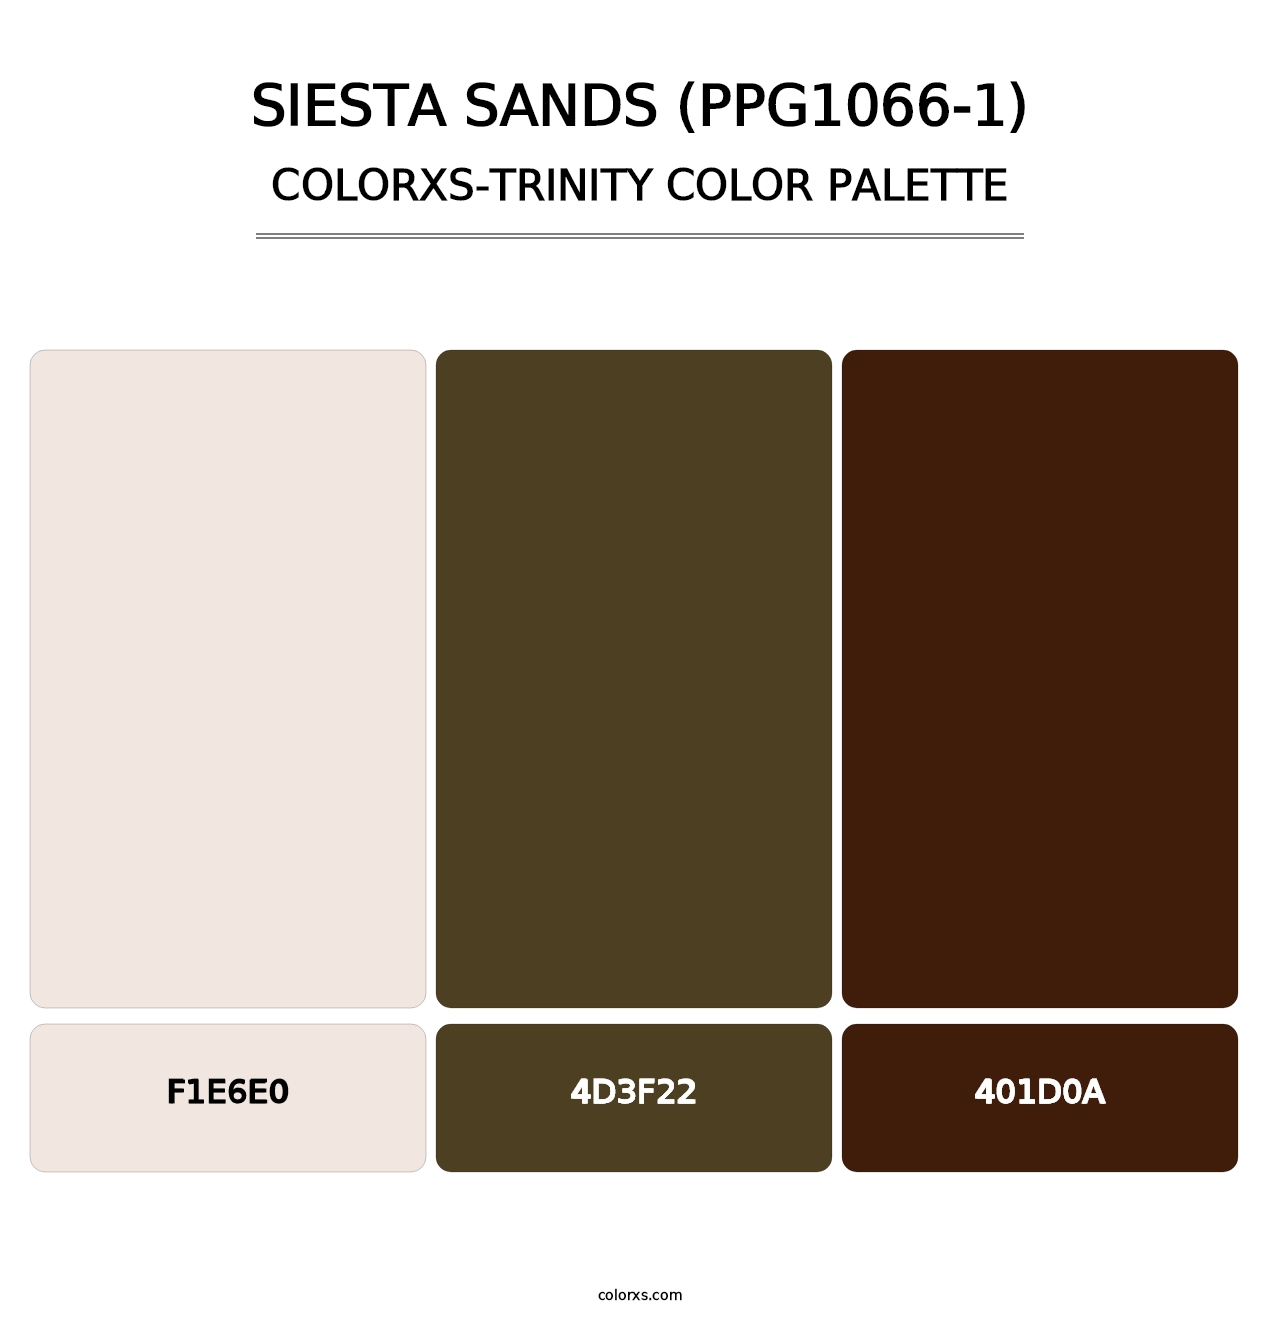 Siesta Sands (PPG1066-1) - Colorxs Trinity Palette